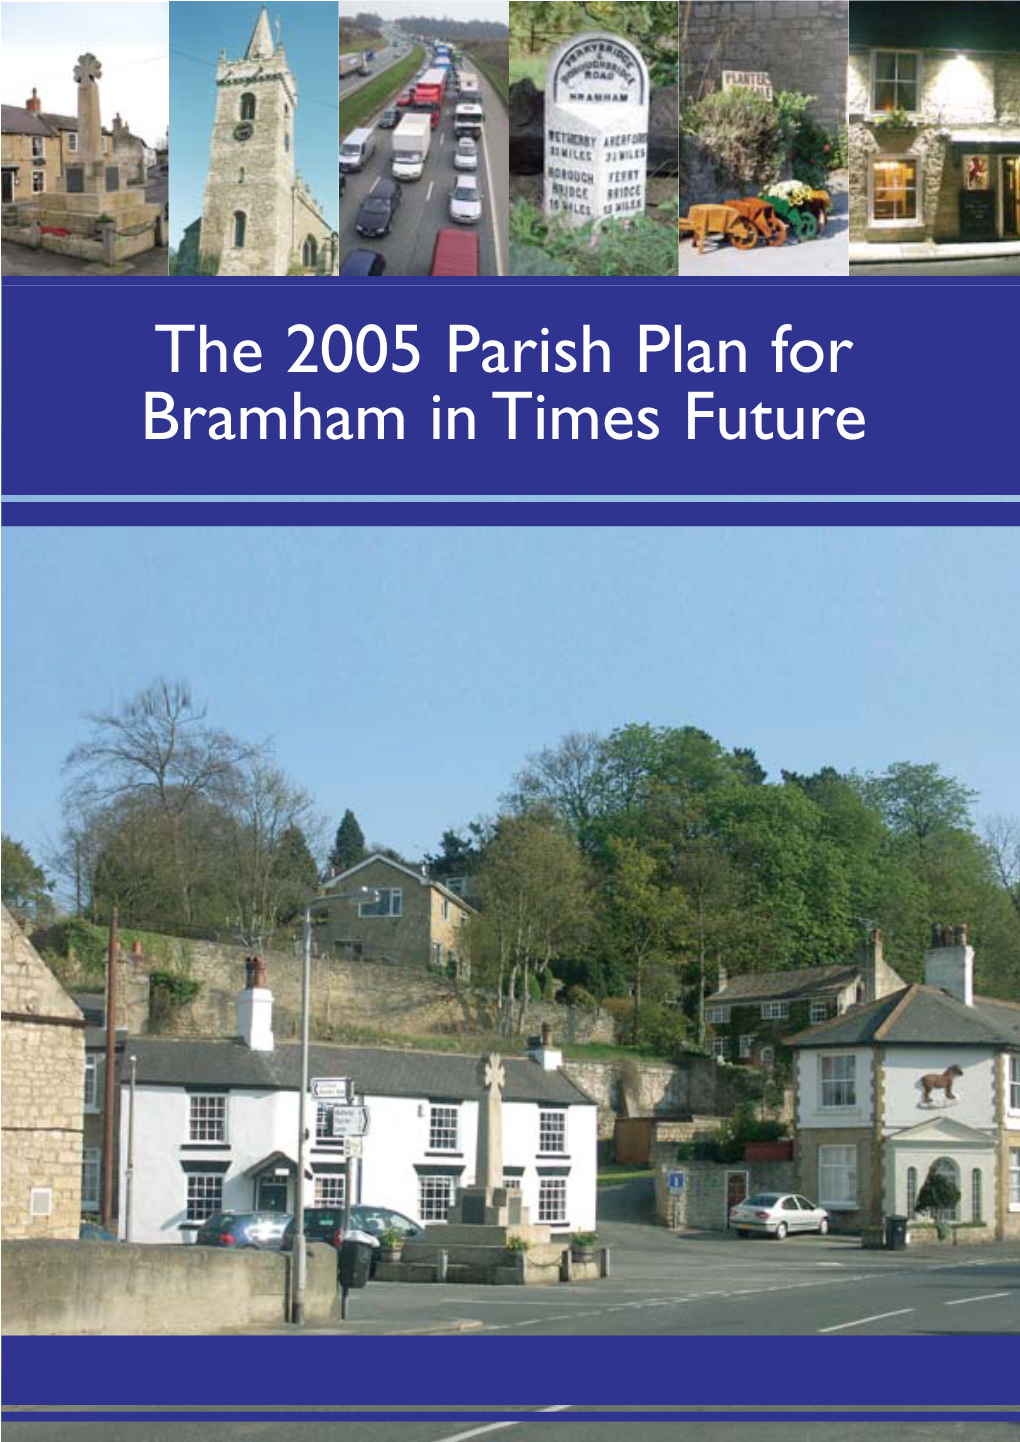 The 2005 Parish Plan for Bramham in Times Future